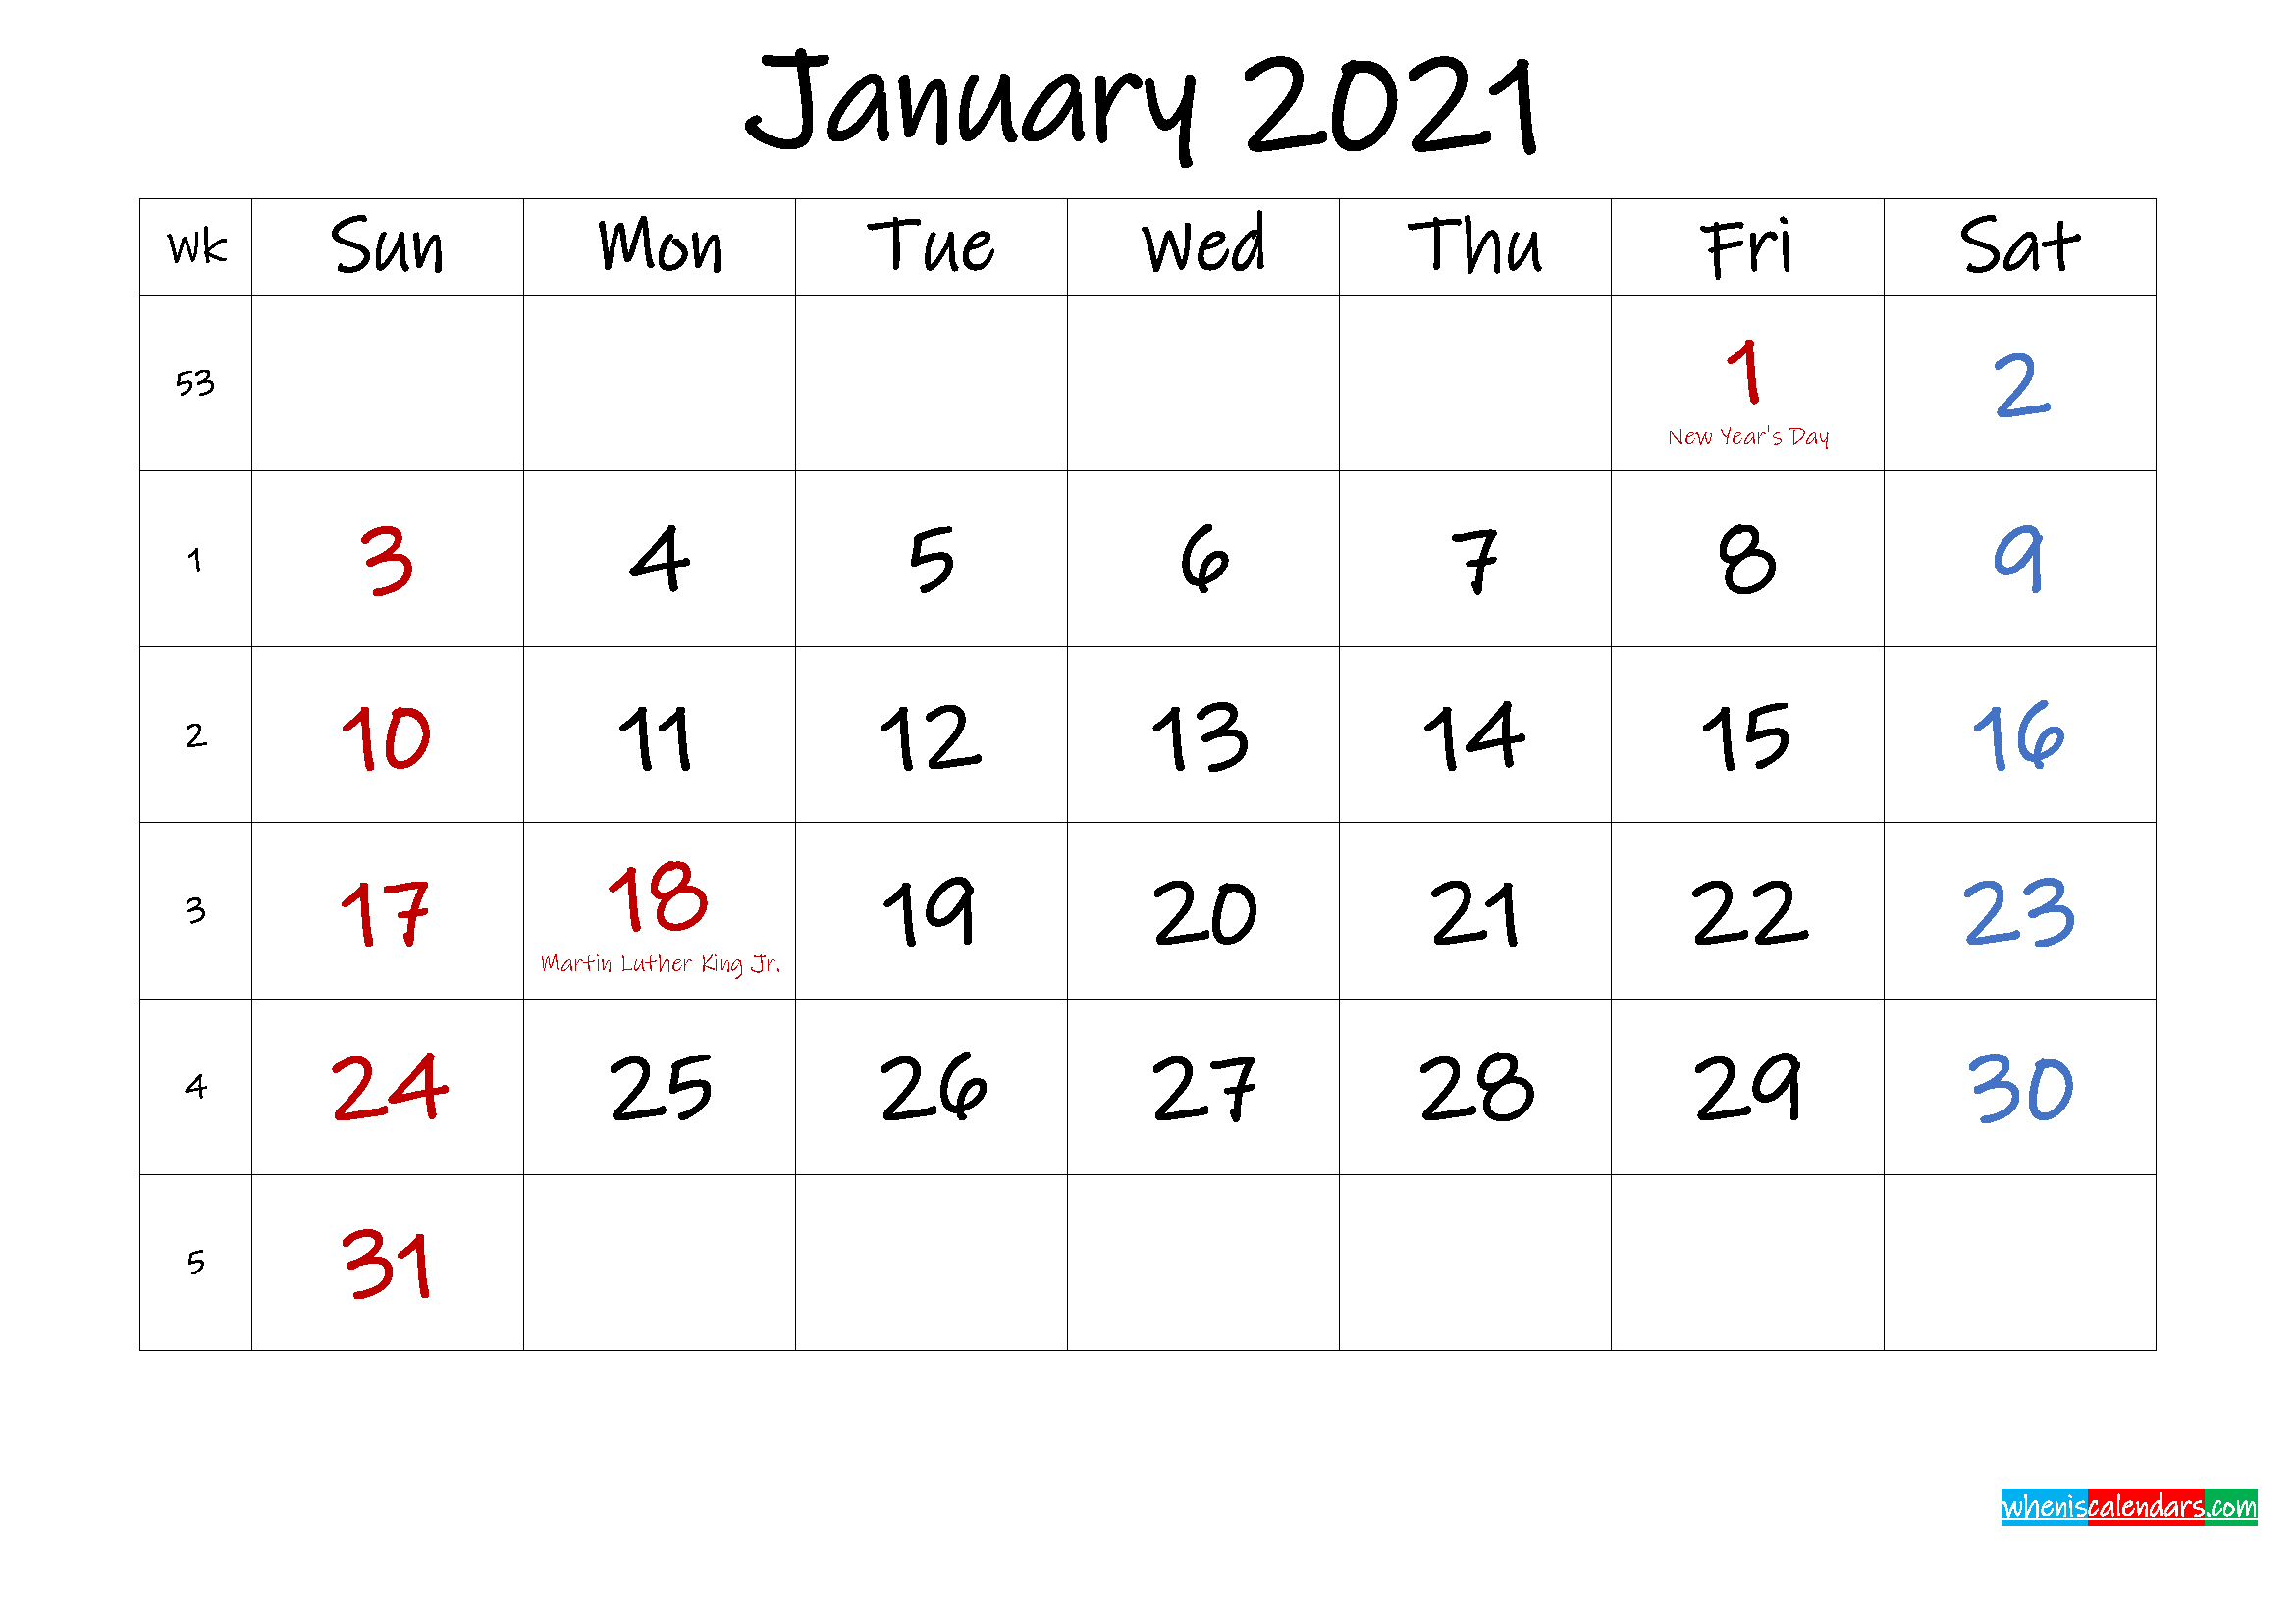 Get Wiki Calendar October 2022